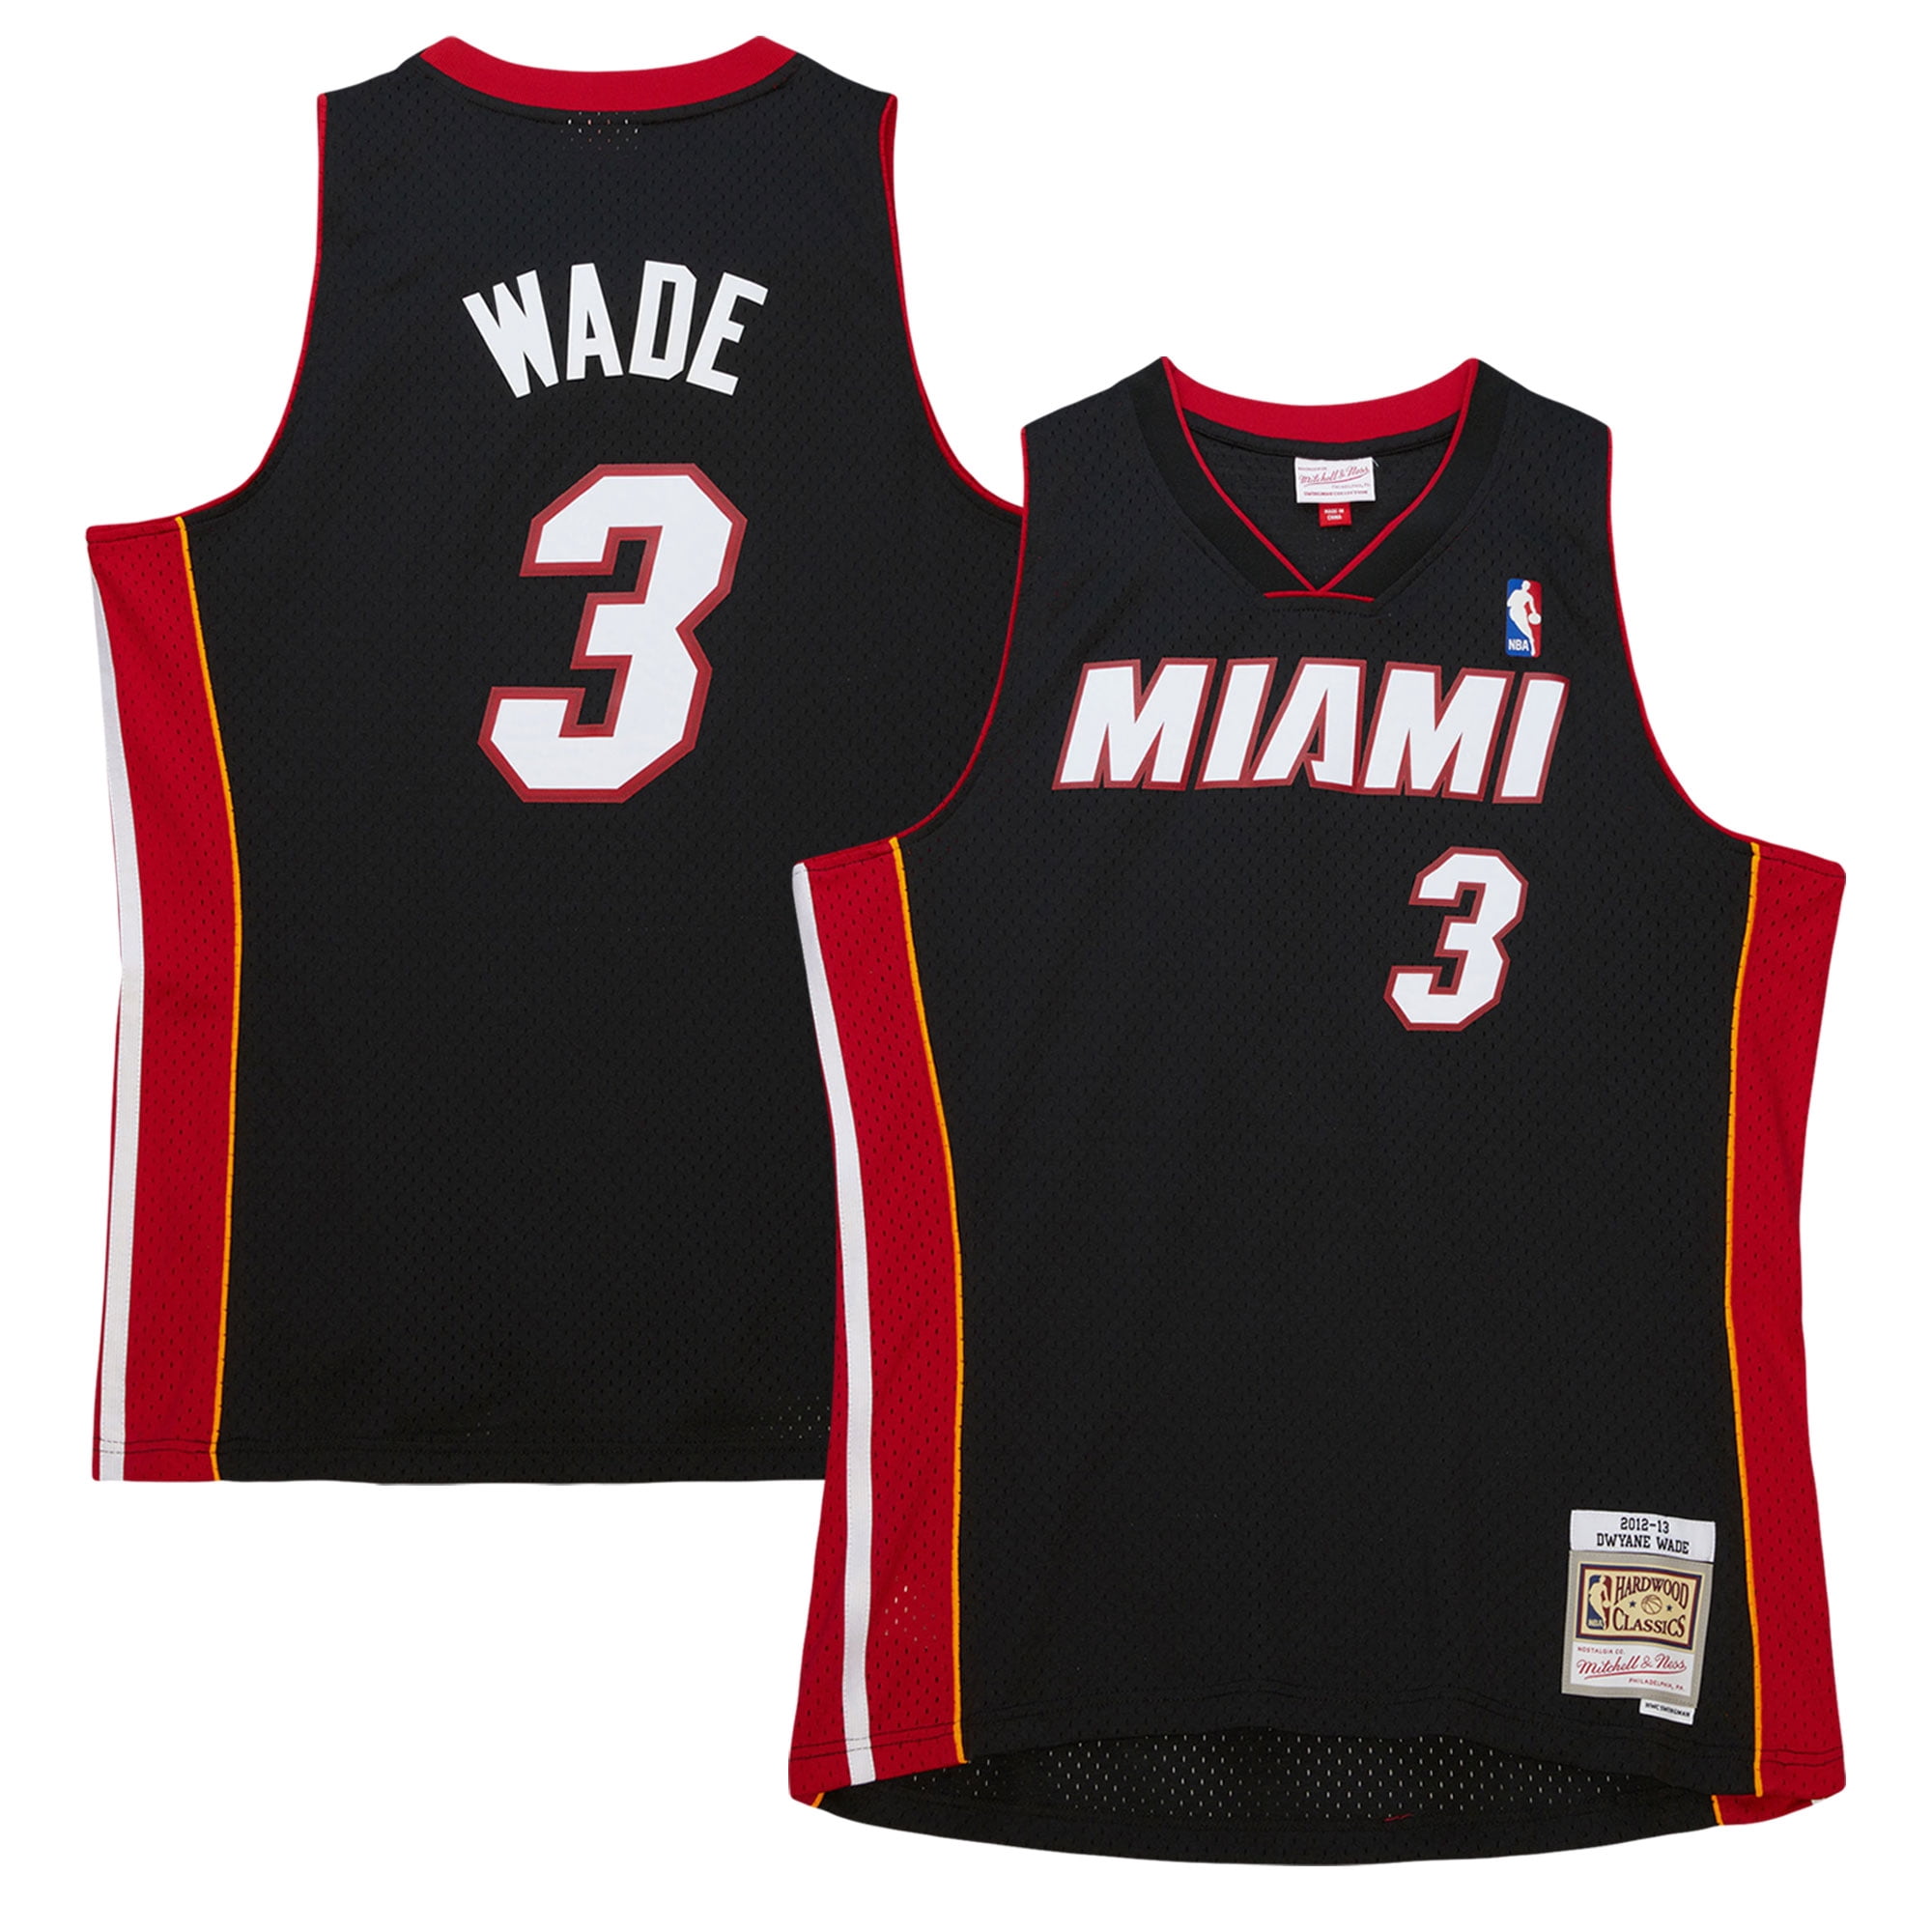 Dwayne Wade Signed Miami Heat Jersey